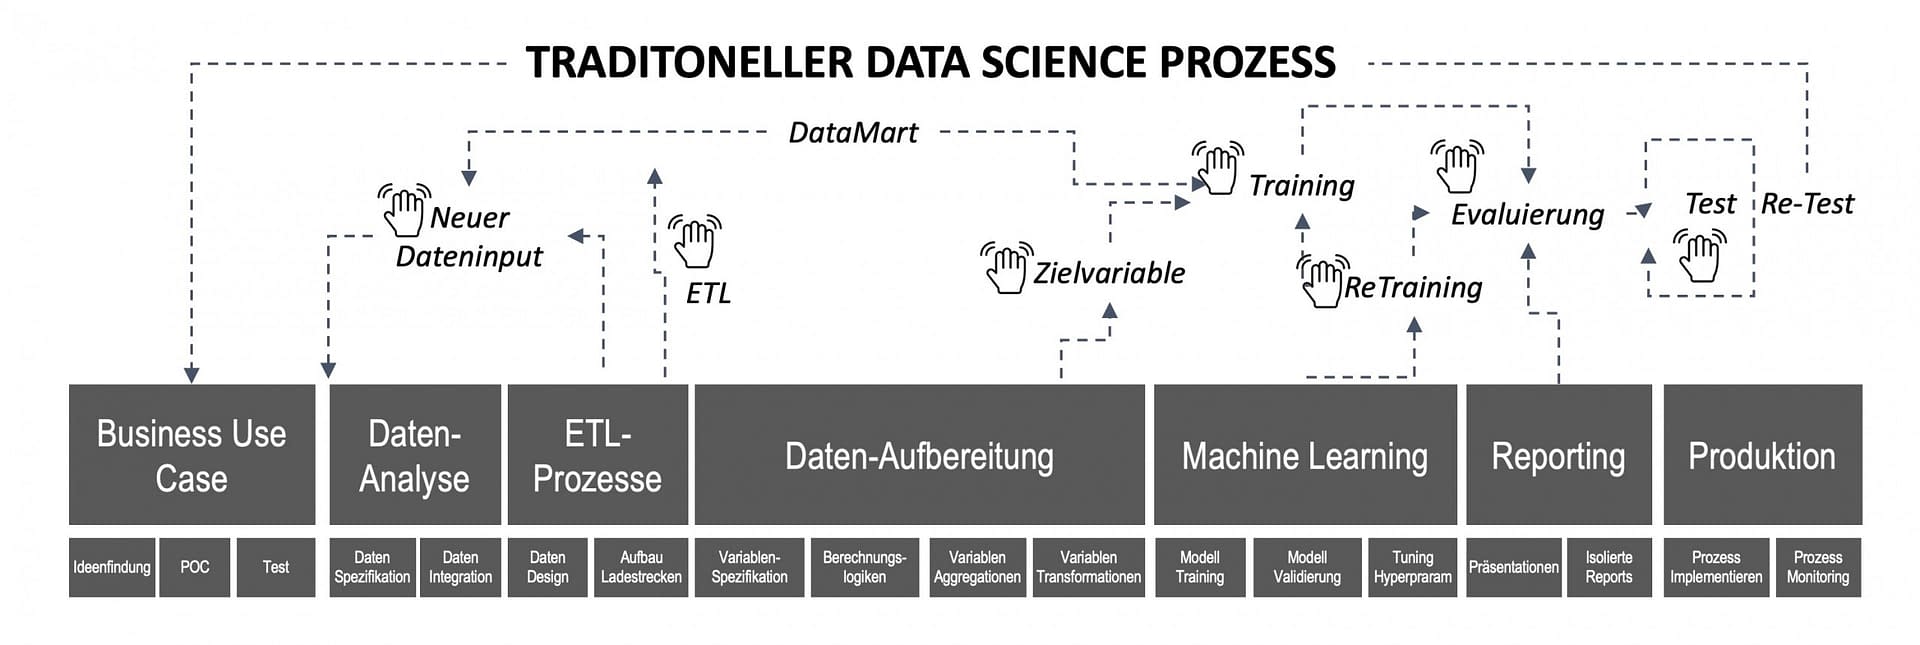 Traditioneller Data Science Prozess